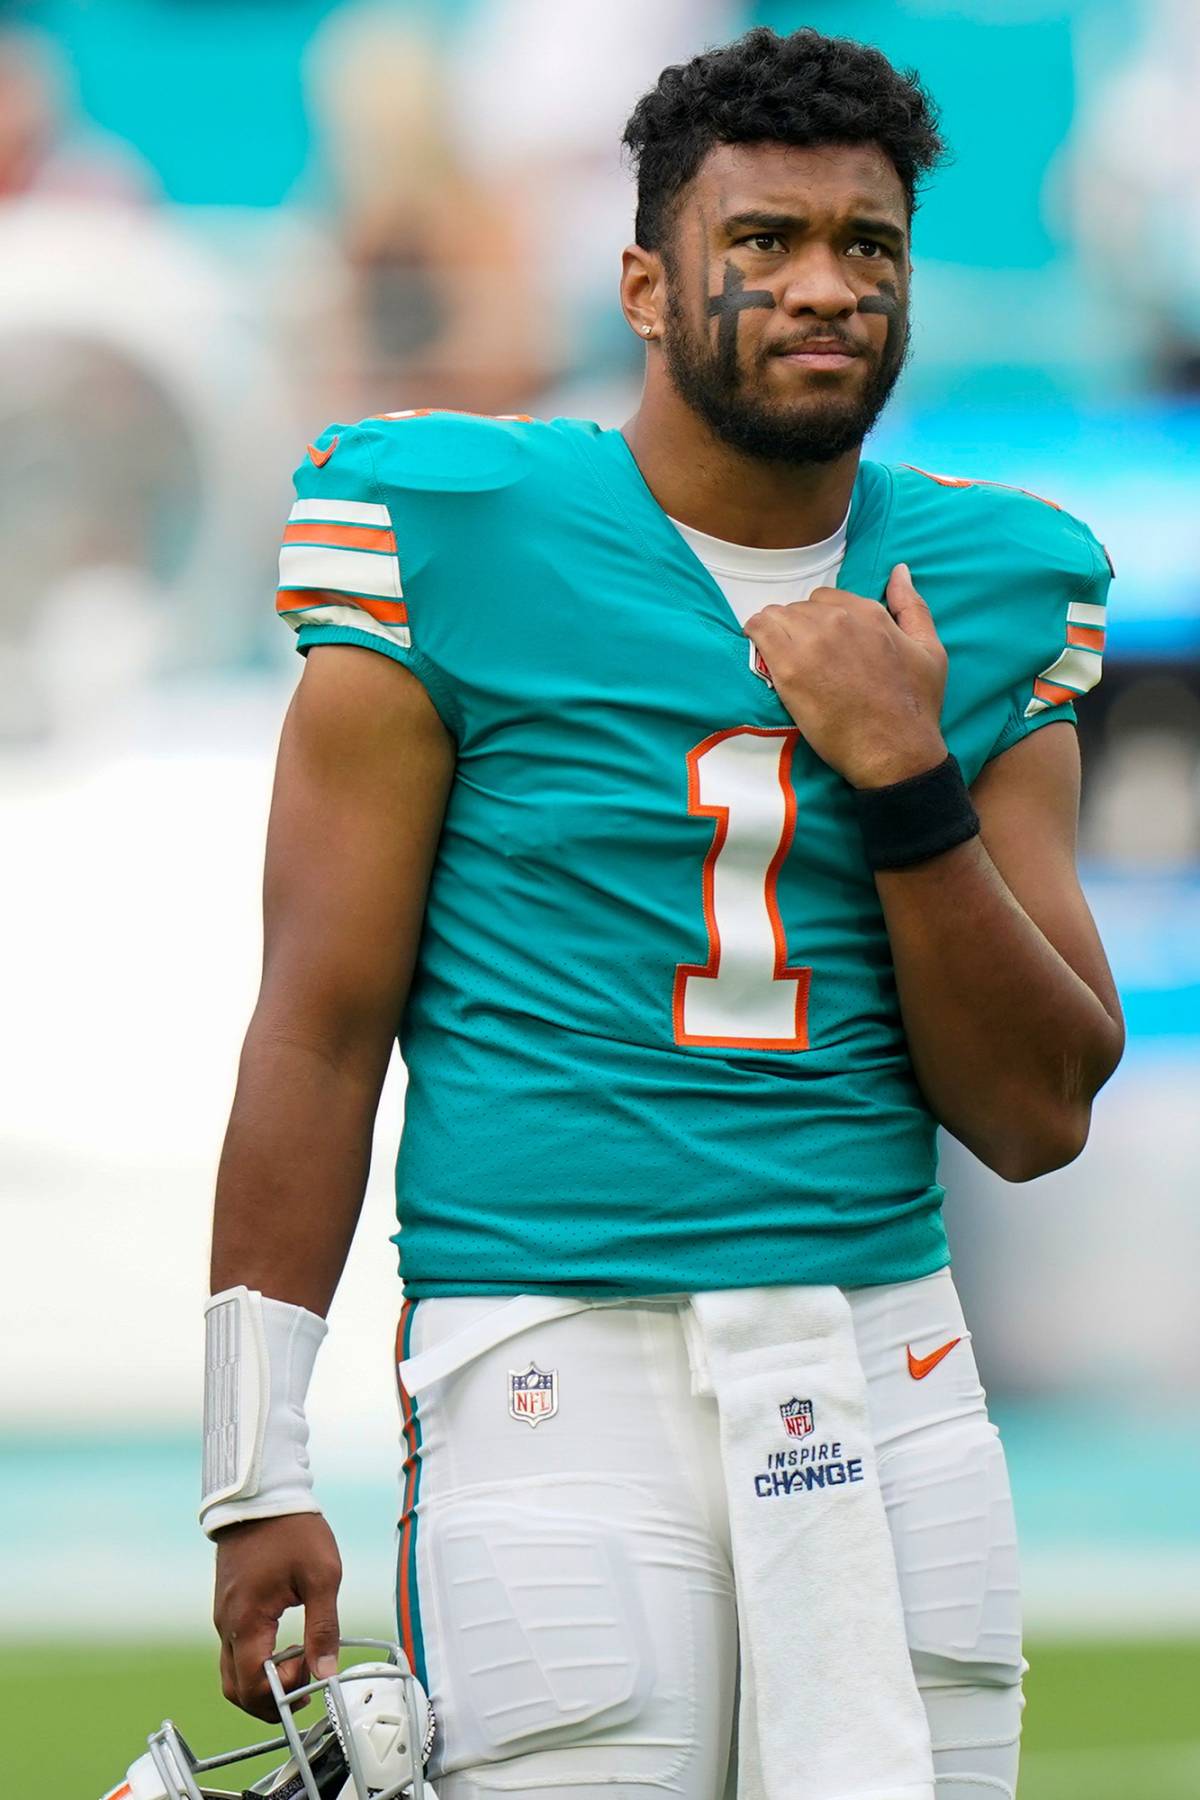 Who is Miami Dolphins quarterback, Tua Tagovailoa?